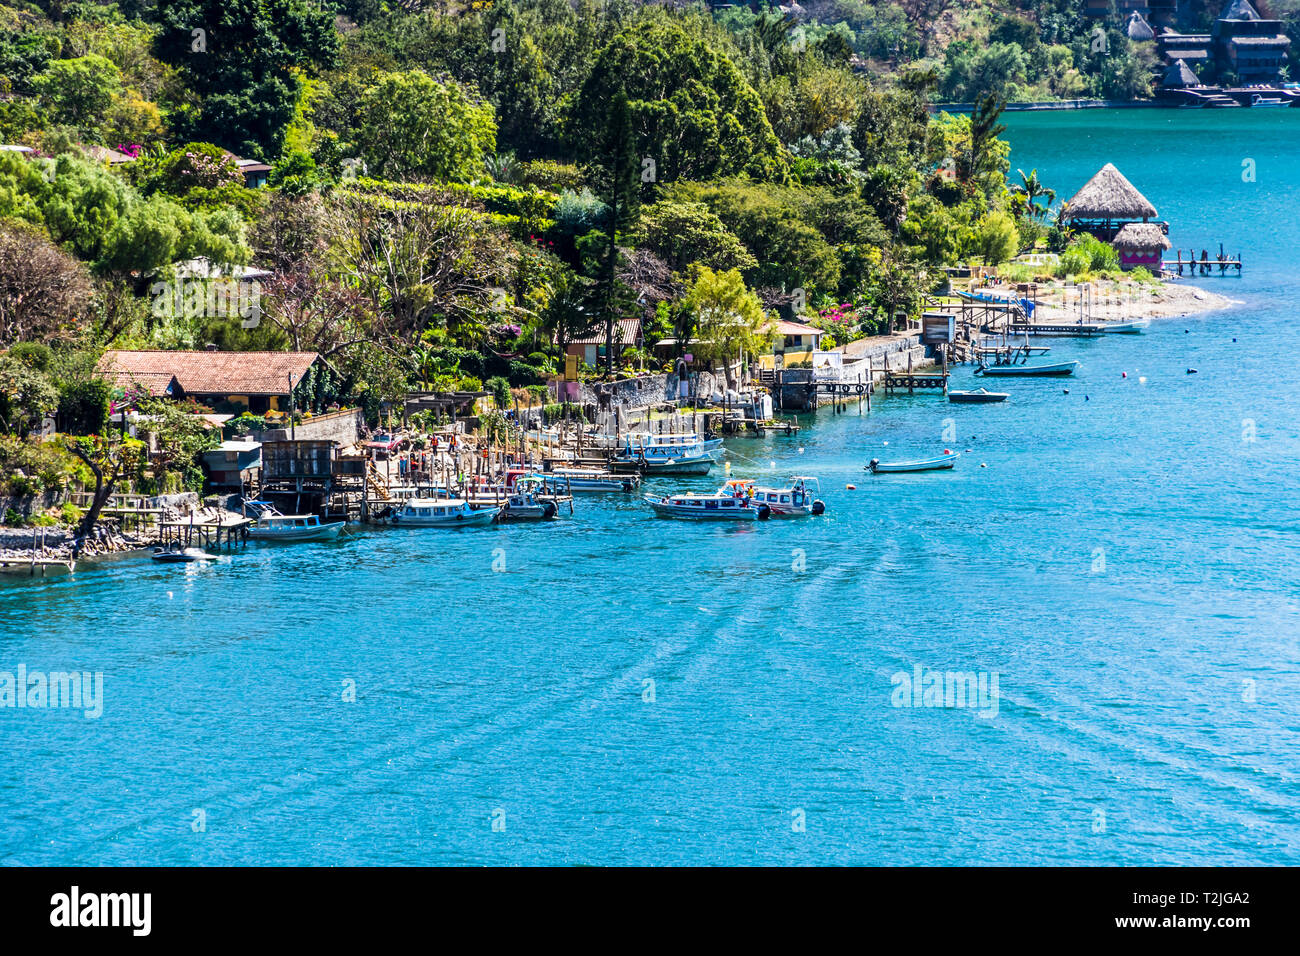 Santa Cruz la Laguna, Atitlan See, Guatemala - Februar 26, 2019: Hohe Aussichtspunkt Blick auf Dock & Boote in Maya Stadt am Ufer des Atitlán-See. Stockfoto